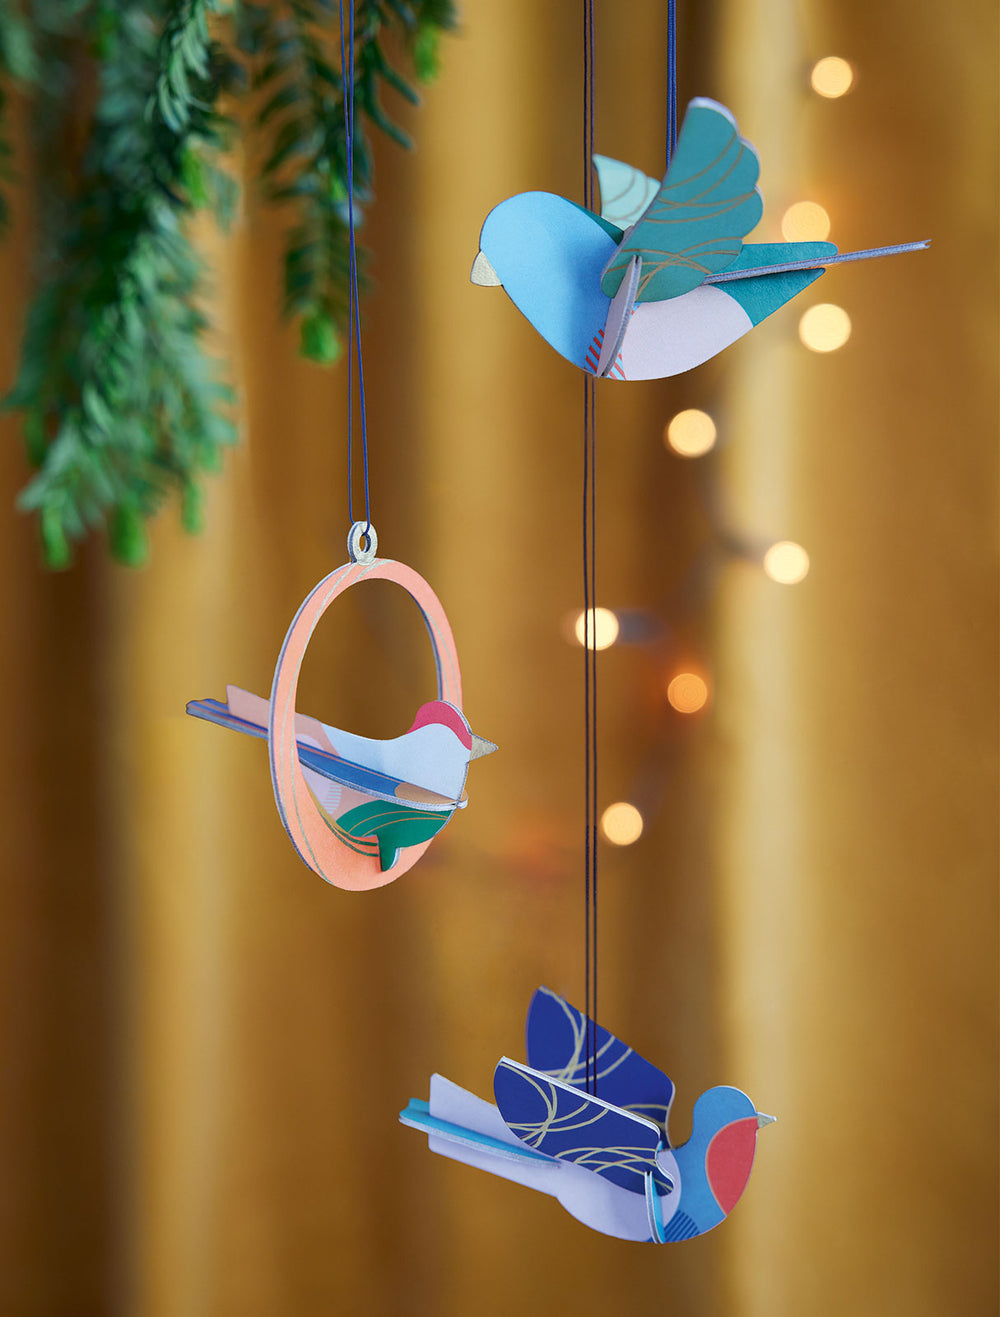 Hanging Calling Birds Decorations